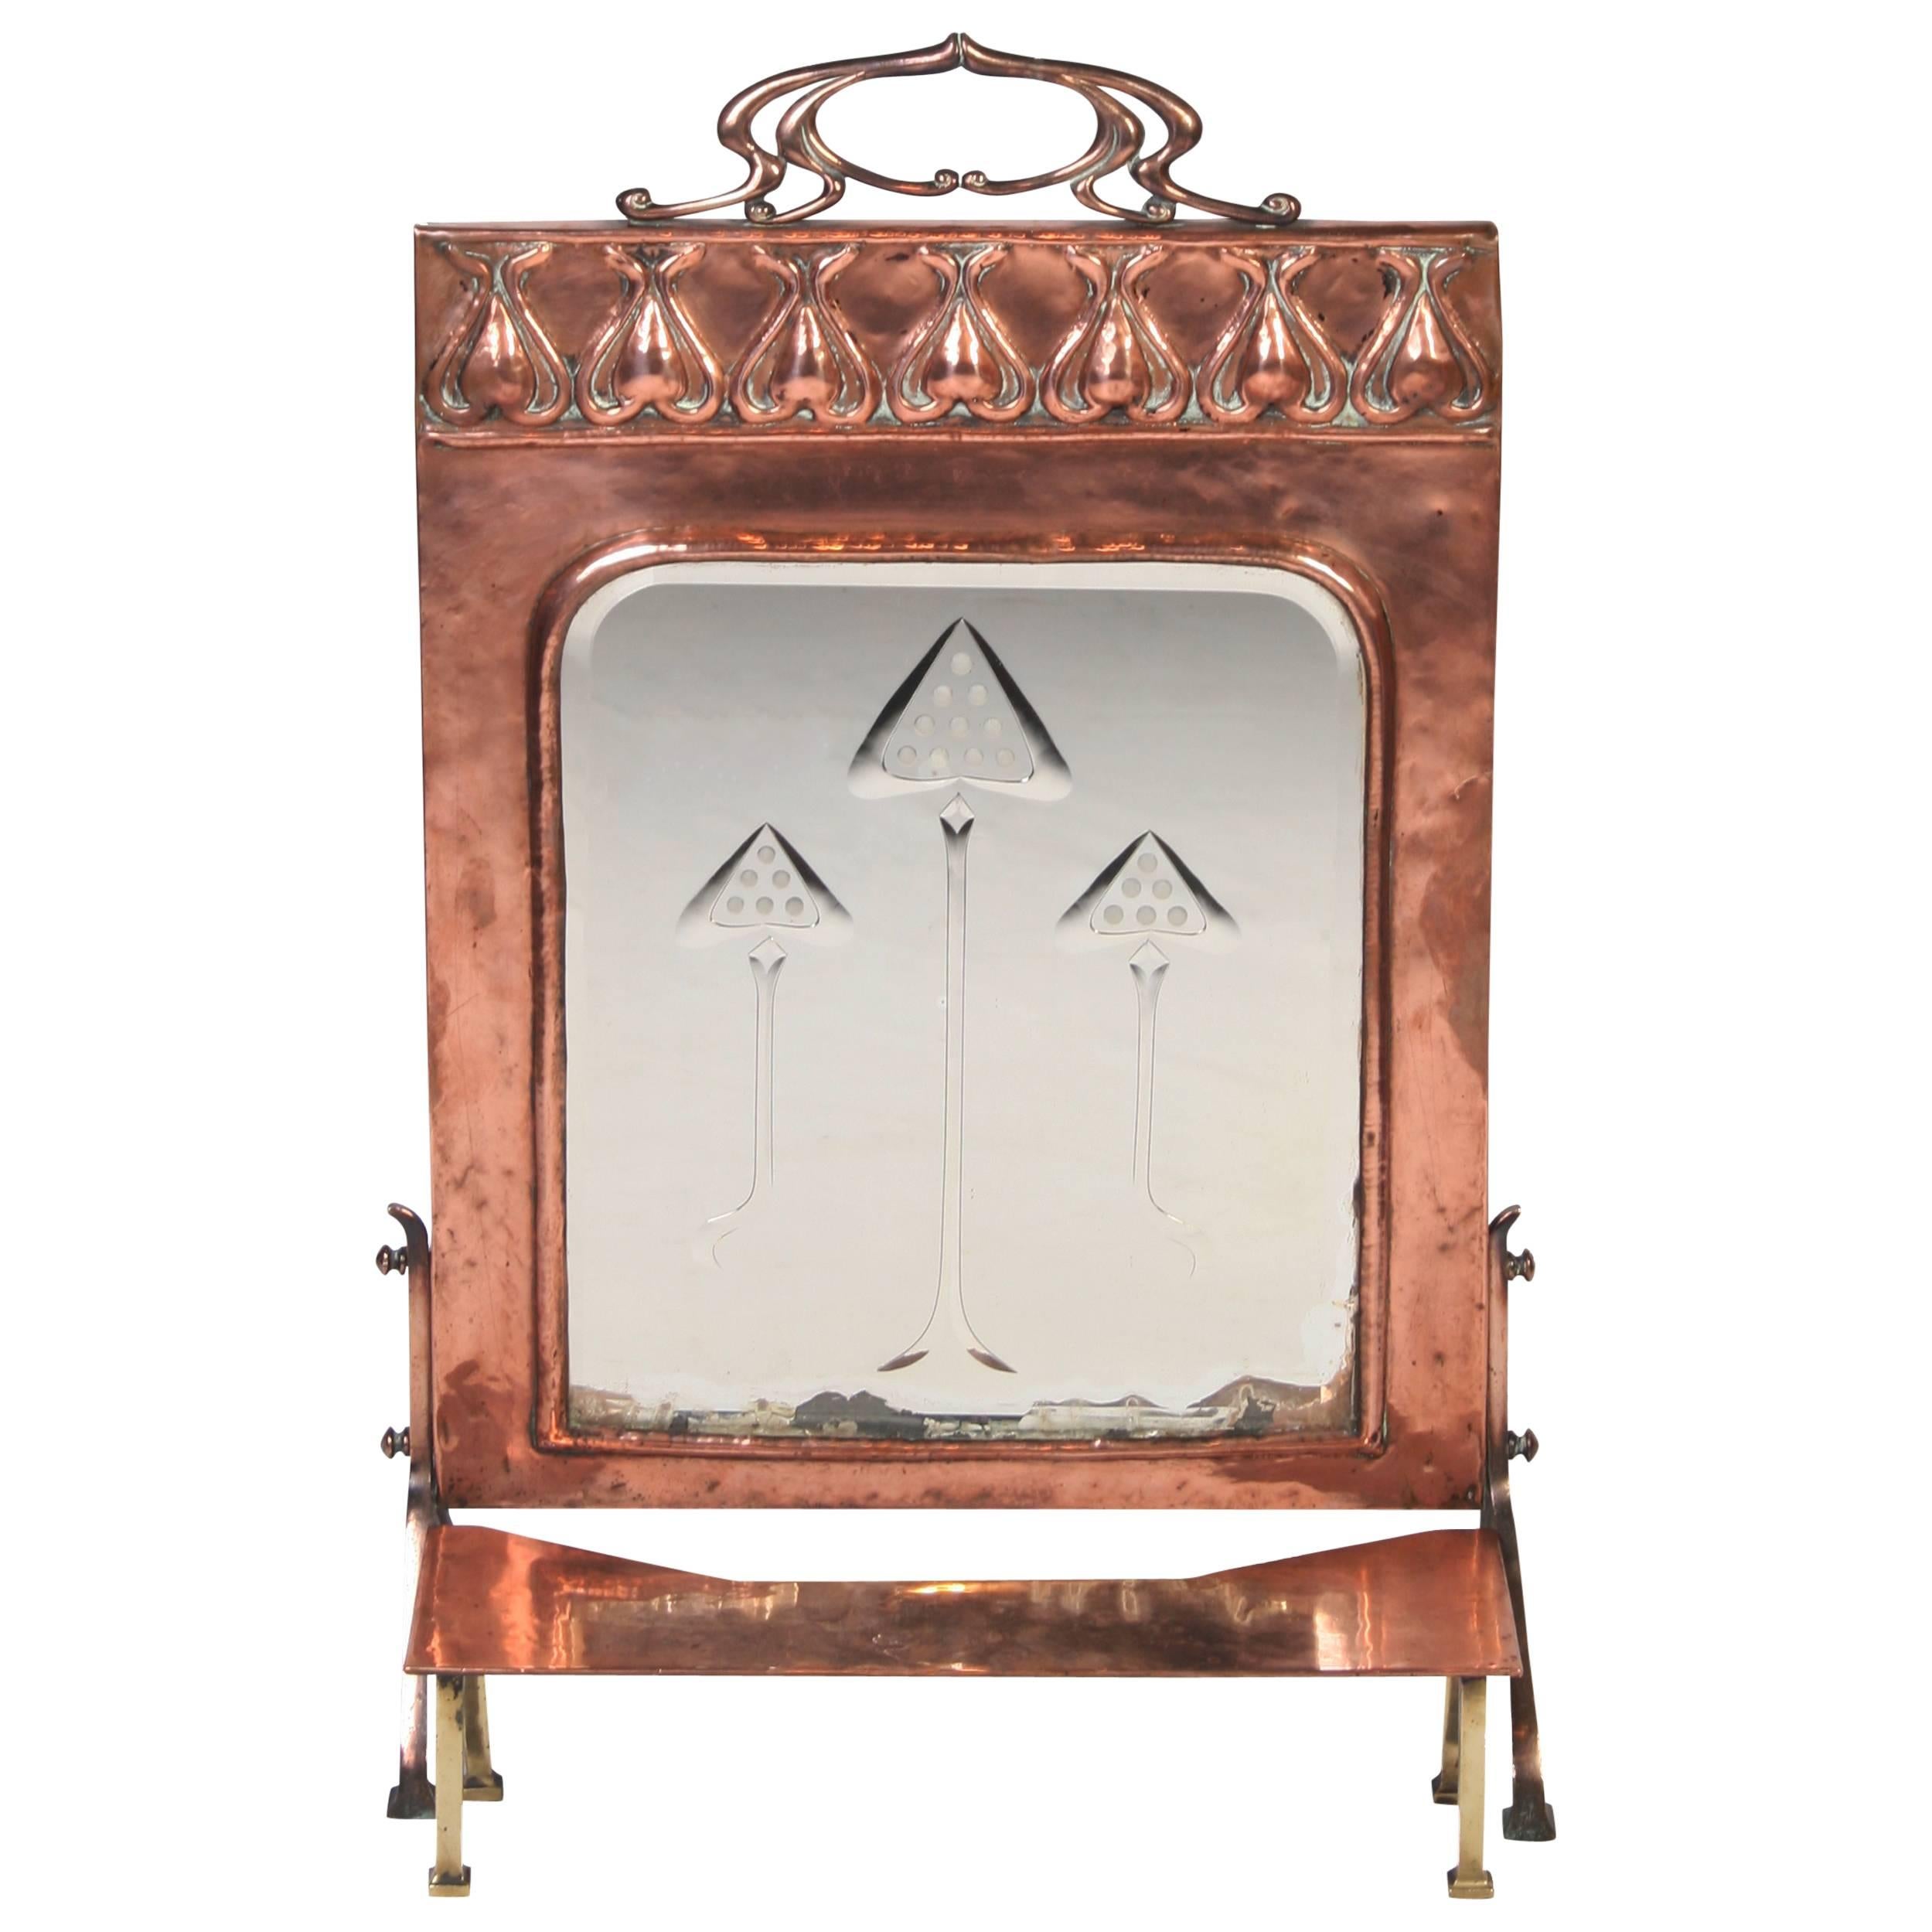 Art Nouveau Period Copper Fire Screen For Sale